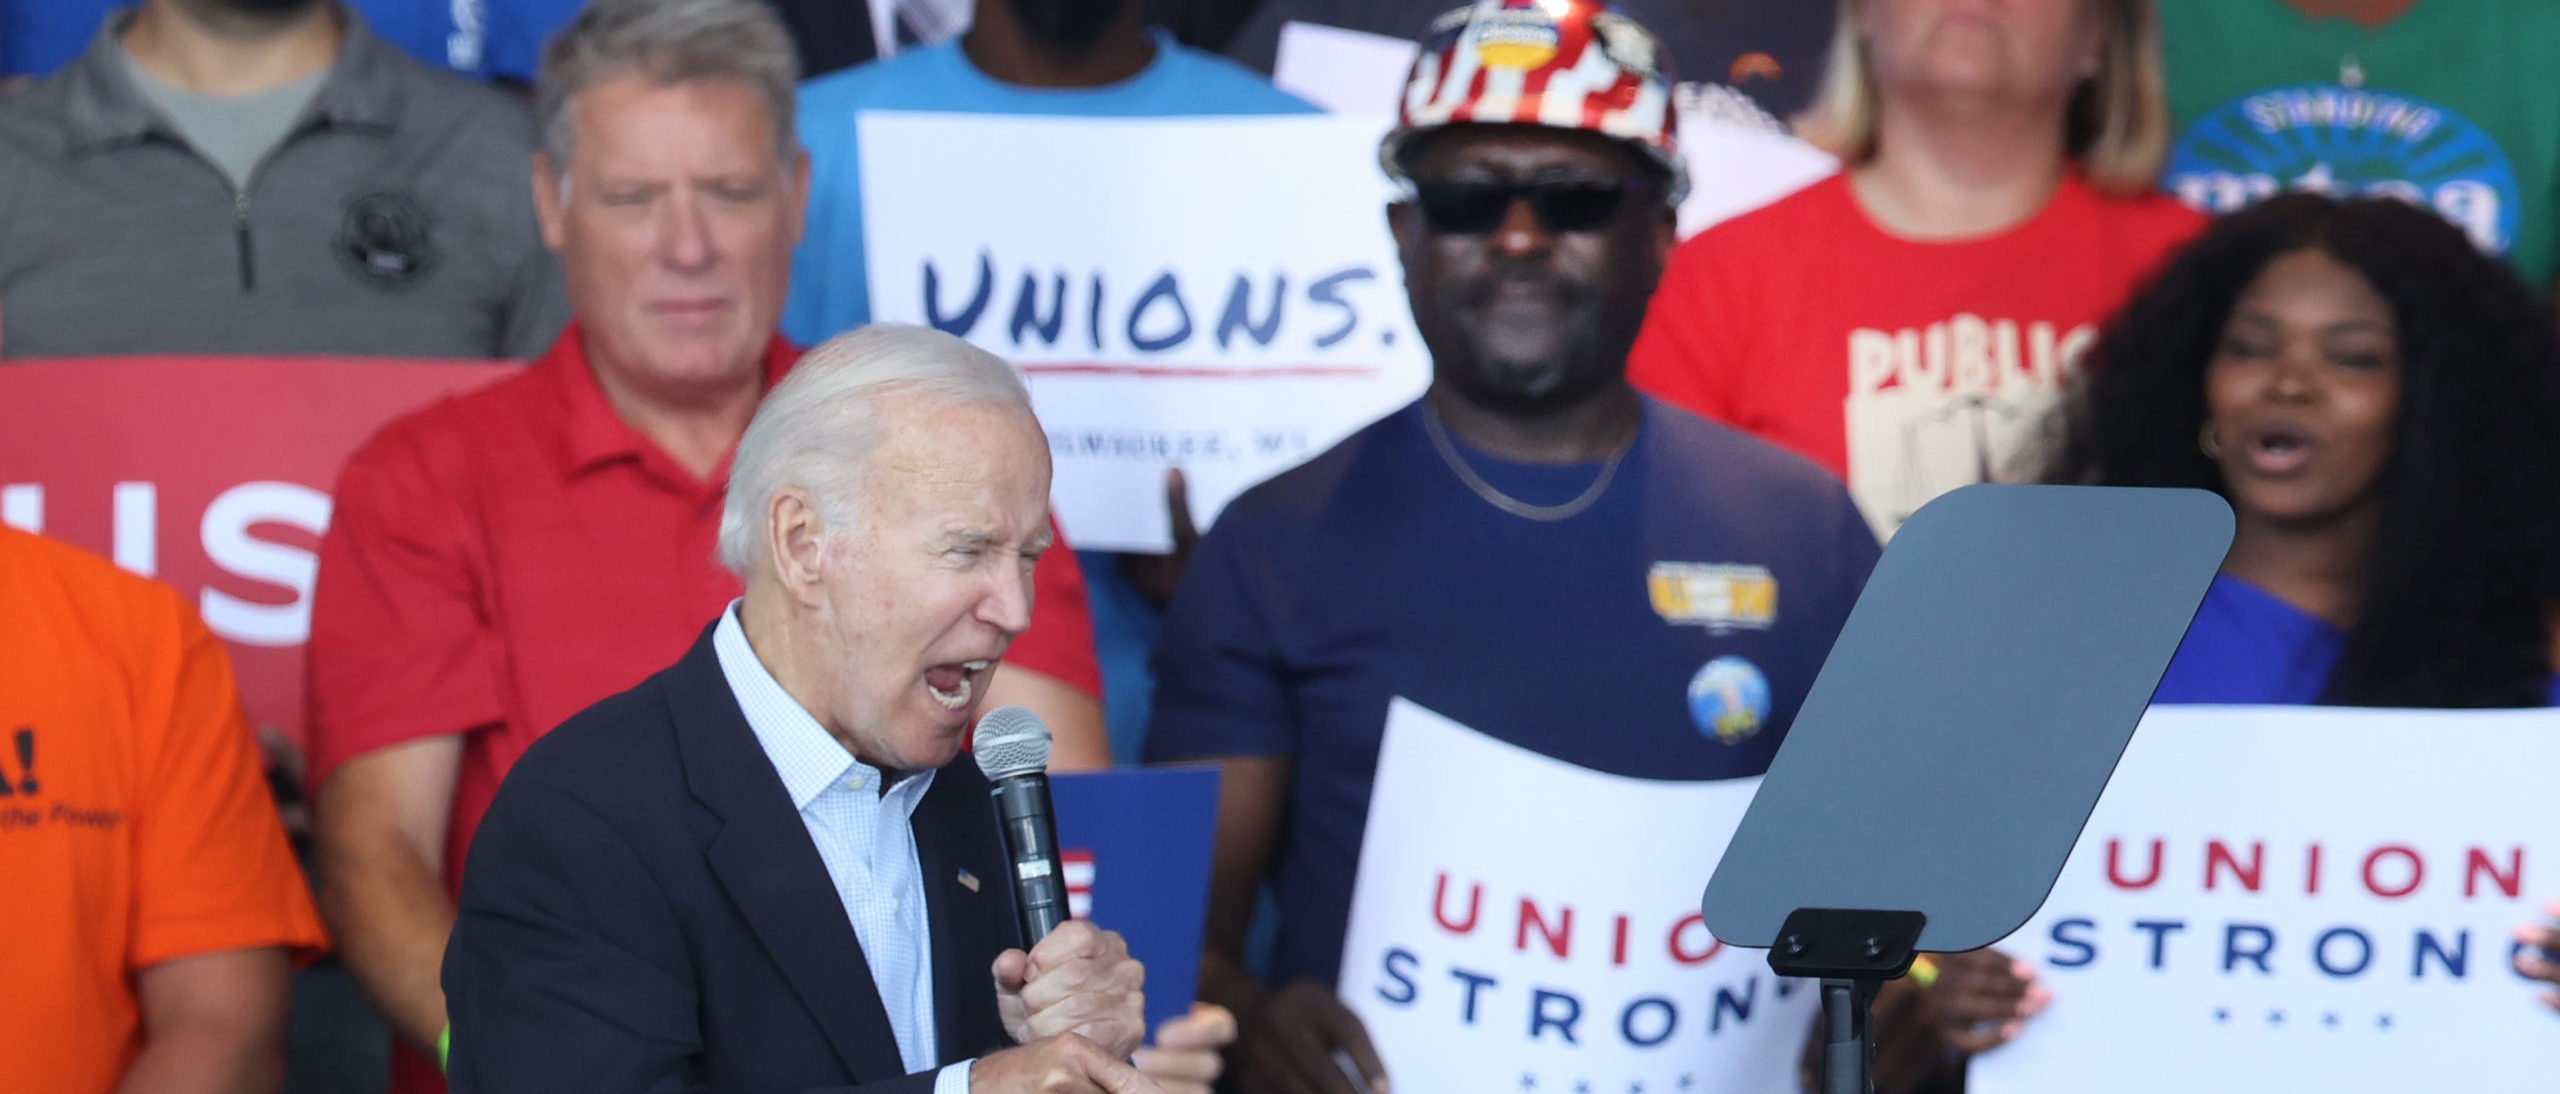 President Joe Biden speaks to a gathering of union workers on September 5, 2022 in Milwaukee, Wisconsin. 